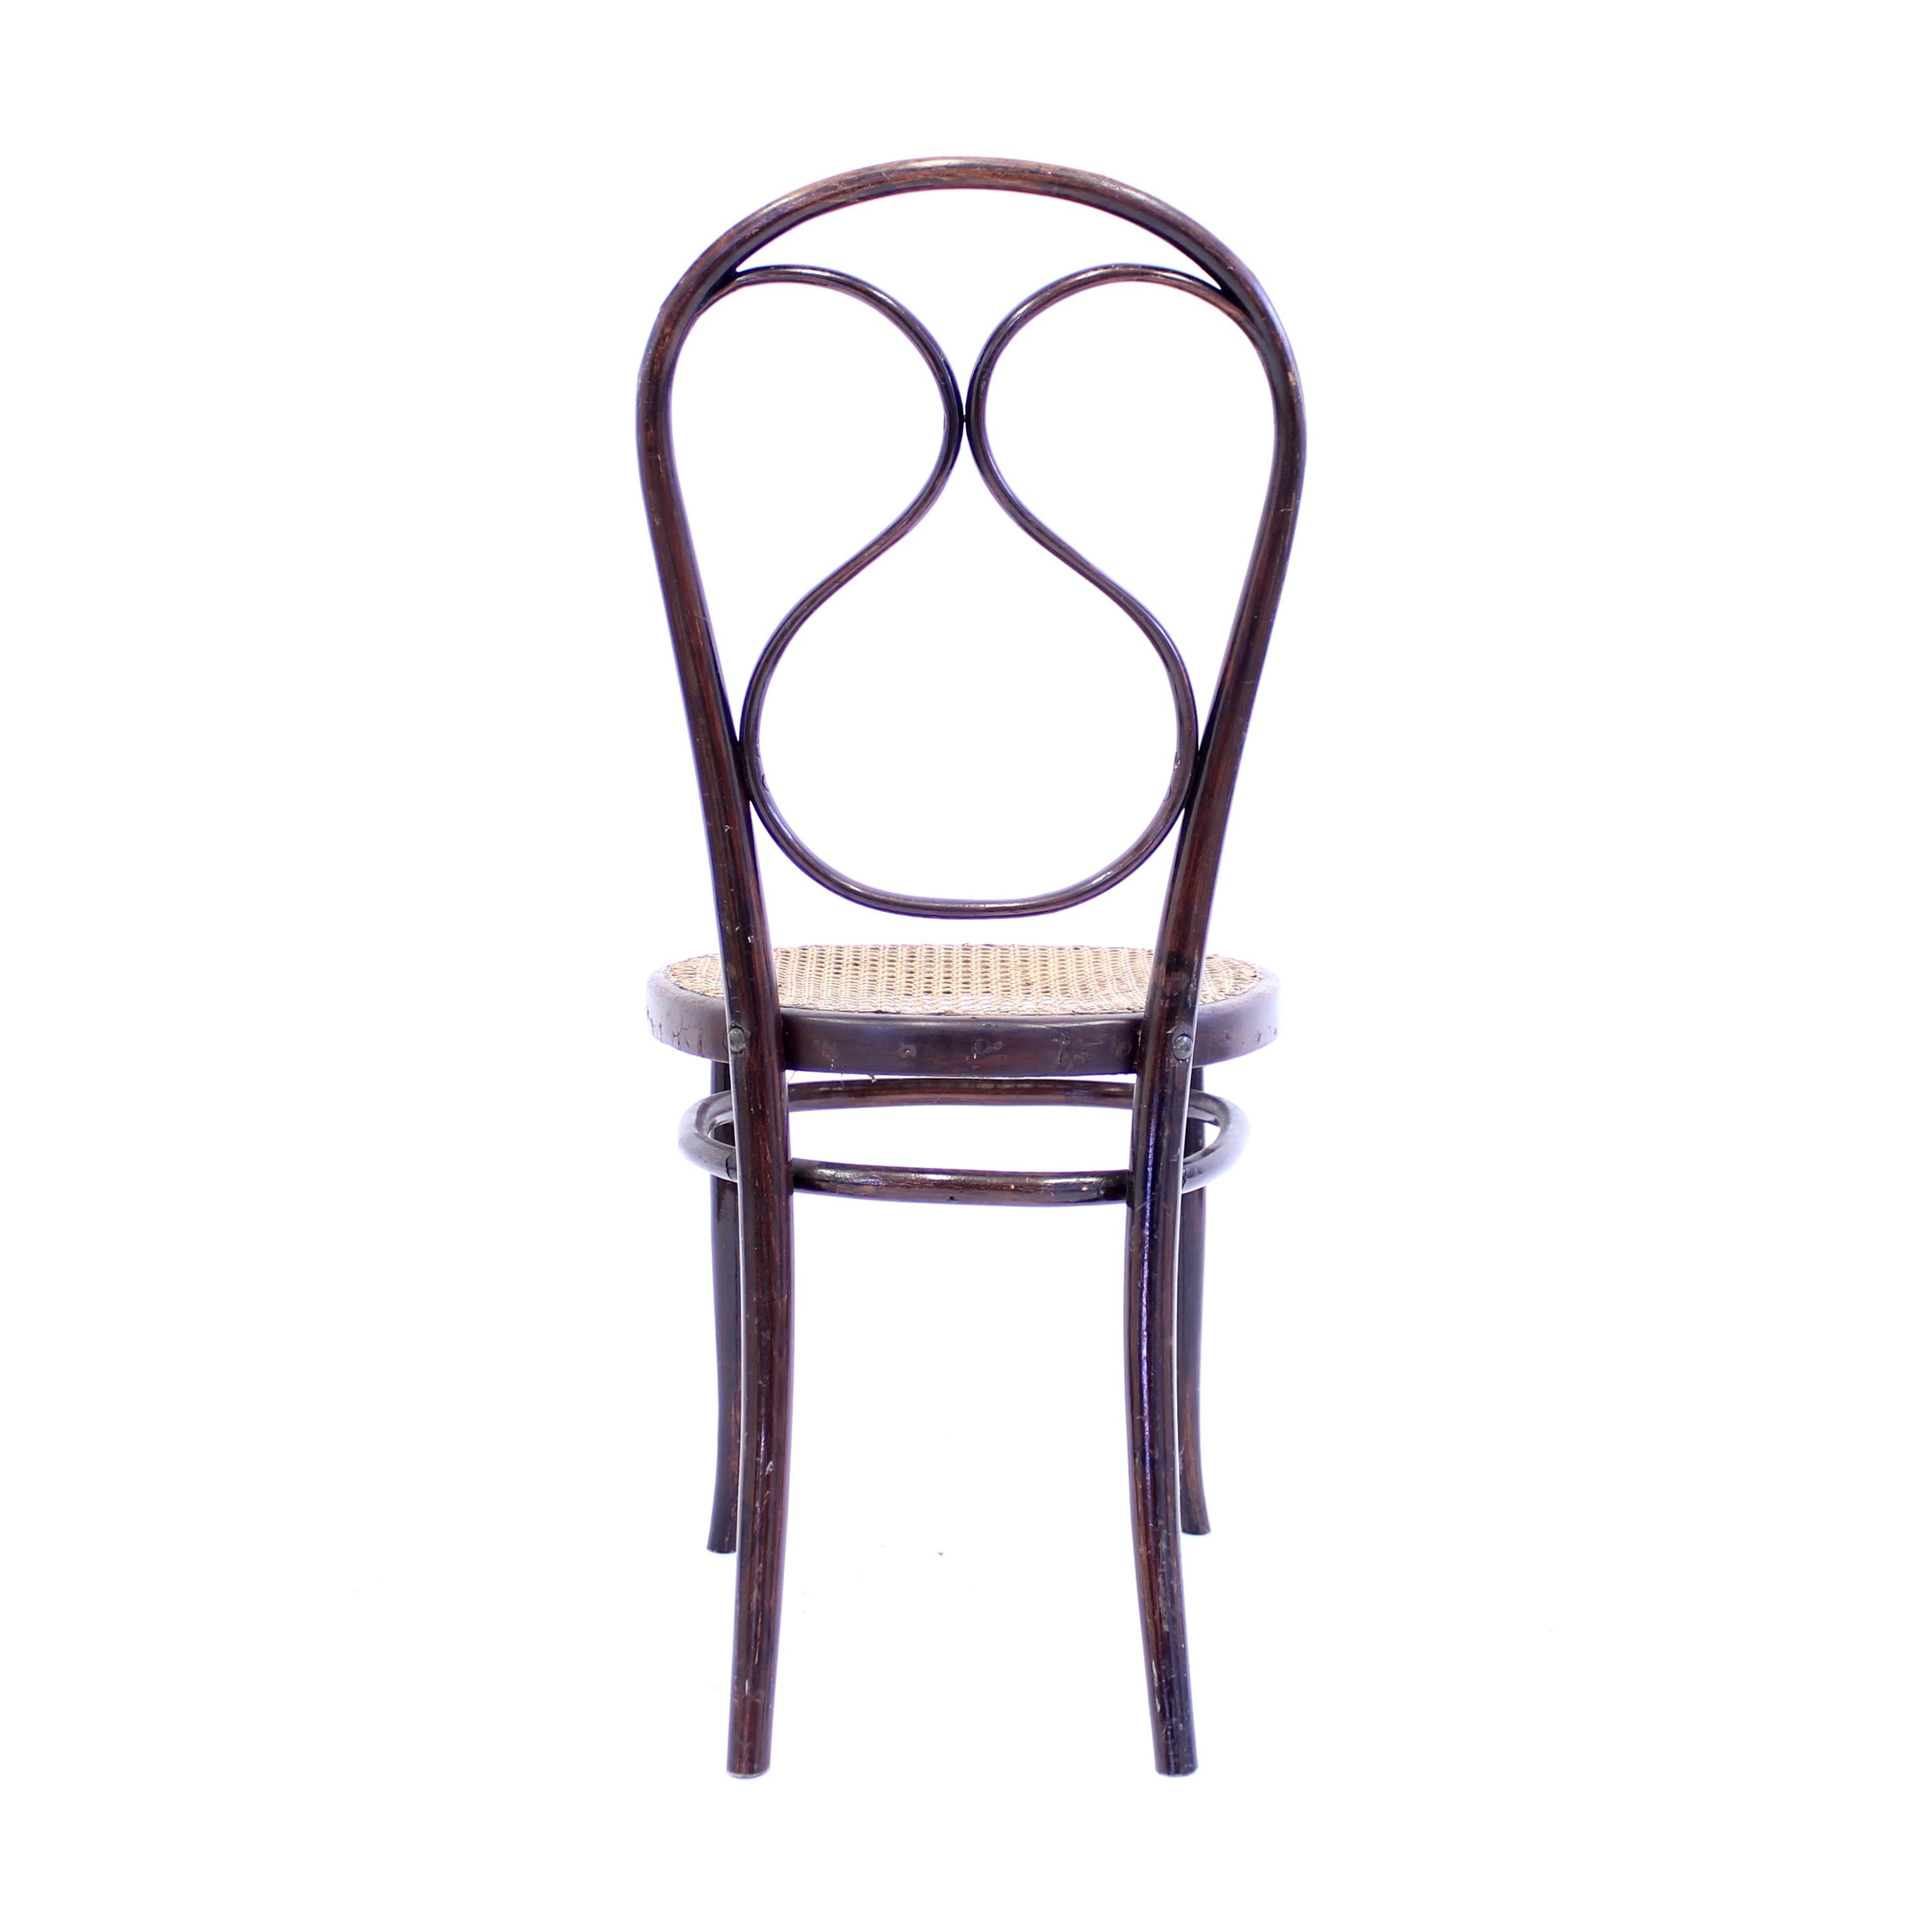 Beech Fischel bentwood café chair, early 20thy century For Sale